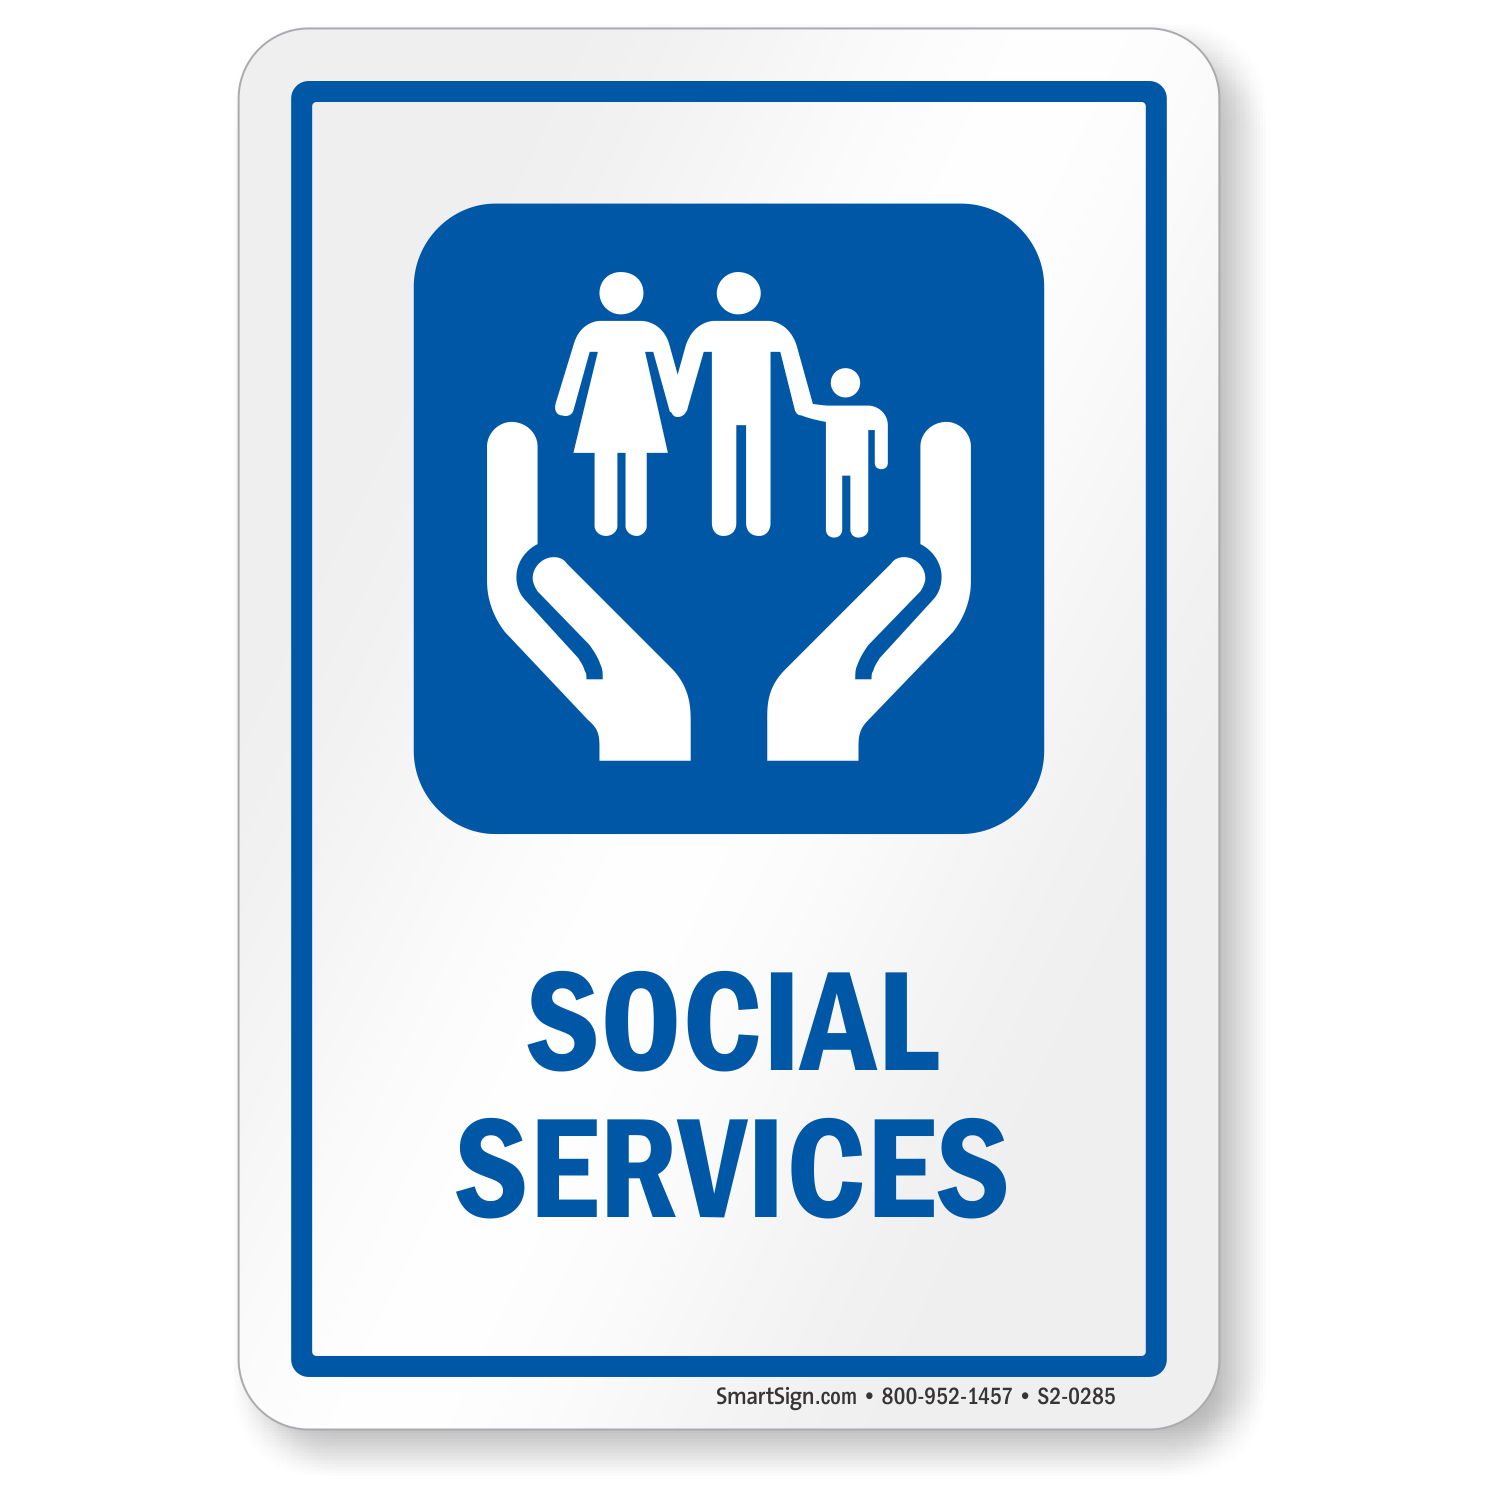 Social Services Sign for Hospitals, SKU S20285